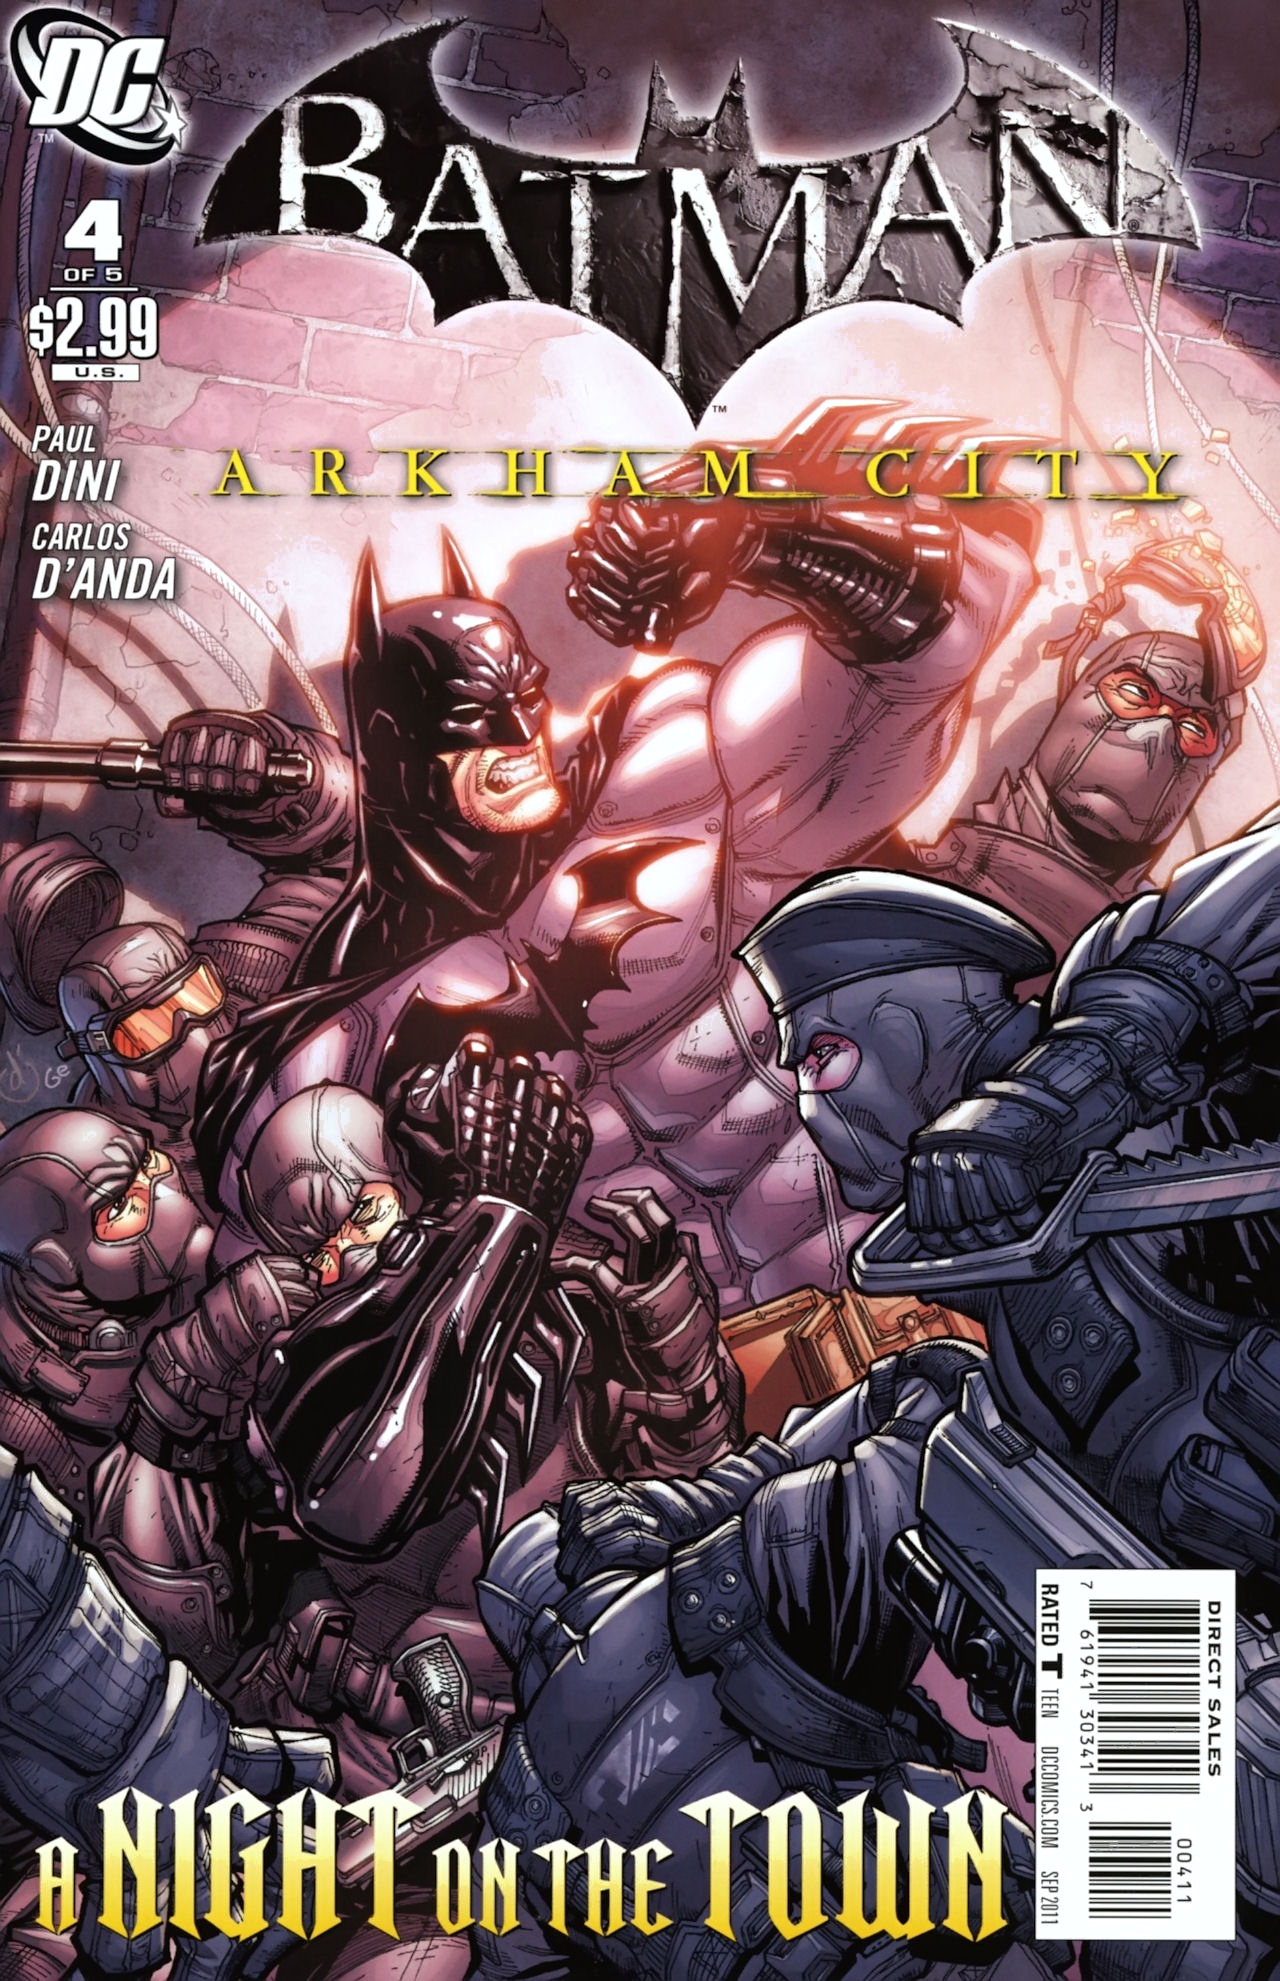 Batman Arkham City Issue 4 | Read Batman Arkham City Issue 4 comic online  in high quality. Read Full Comic online for free - Read comics online in  high quality .|